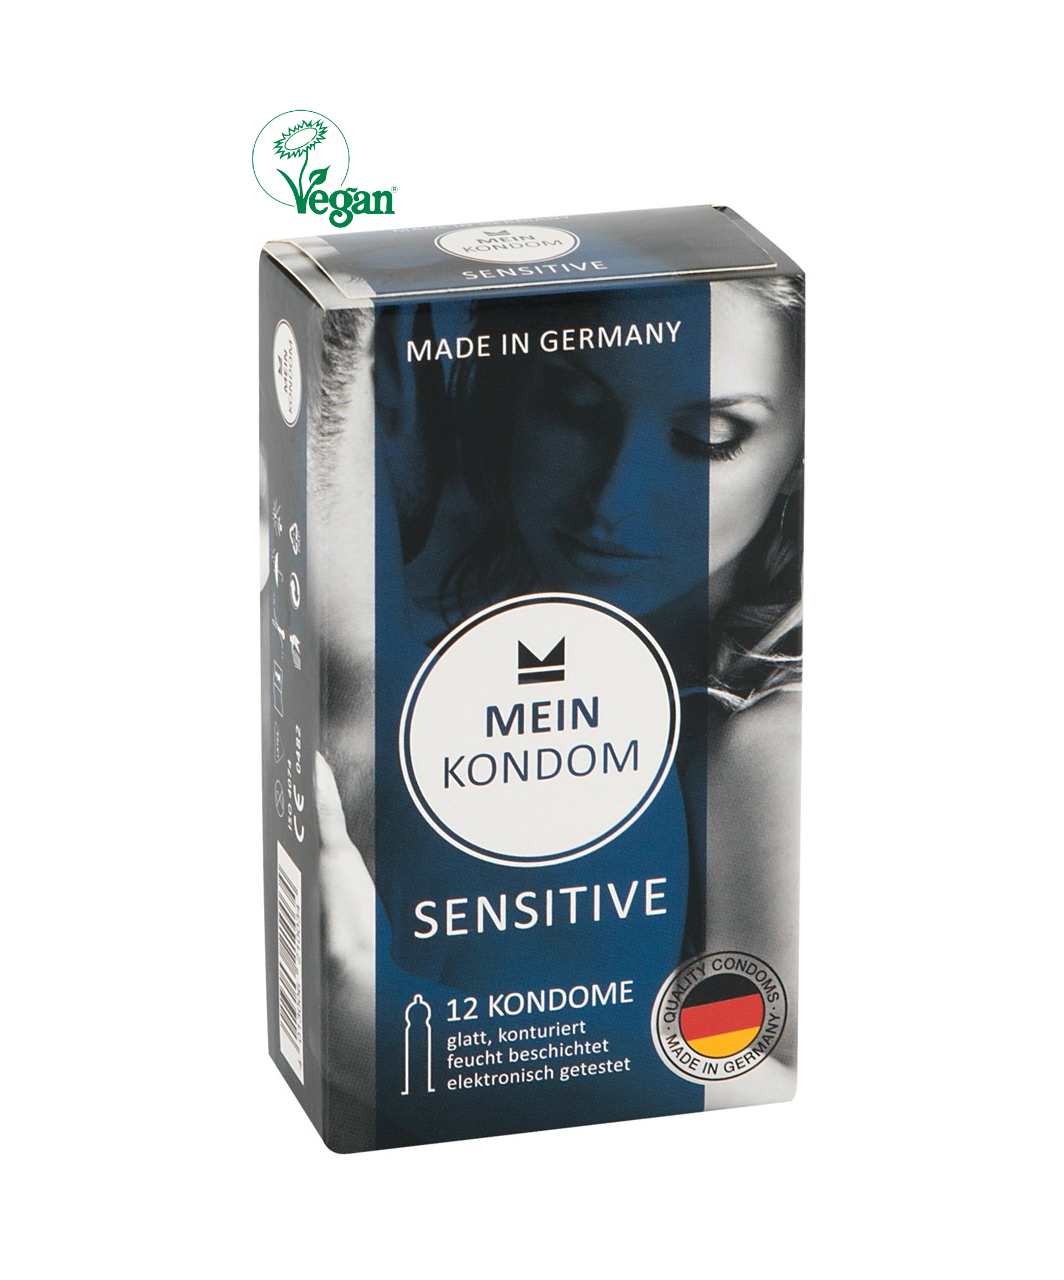 Mein Kondom Sensitive (12 pcs)